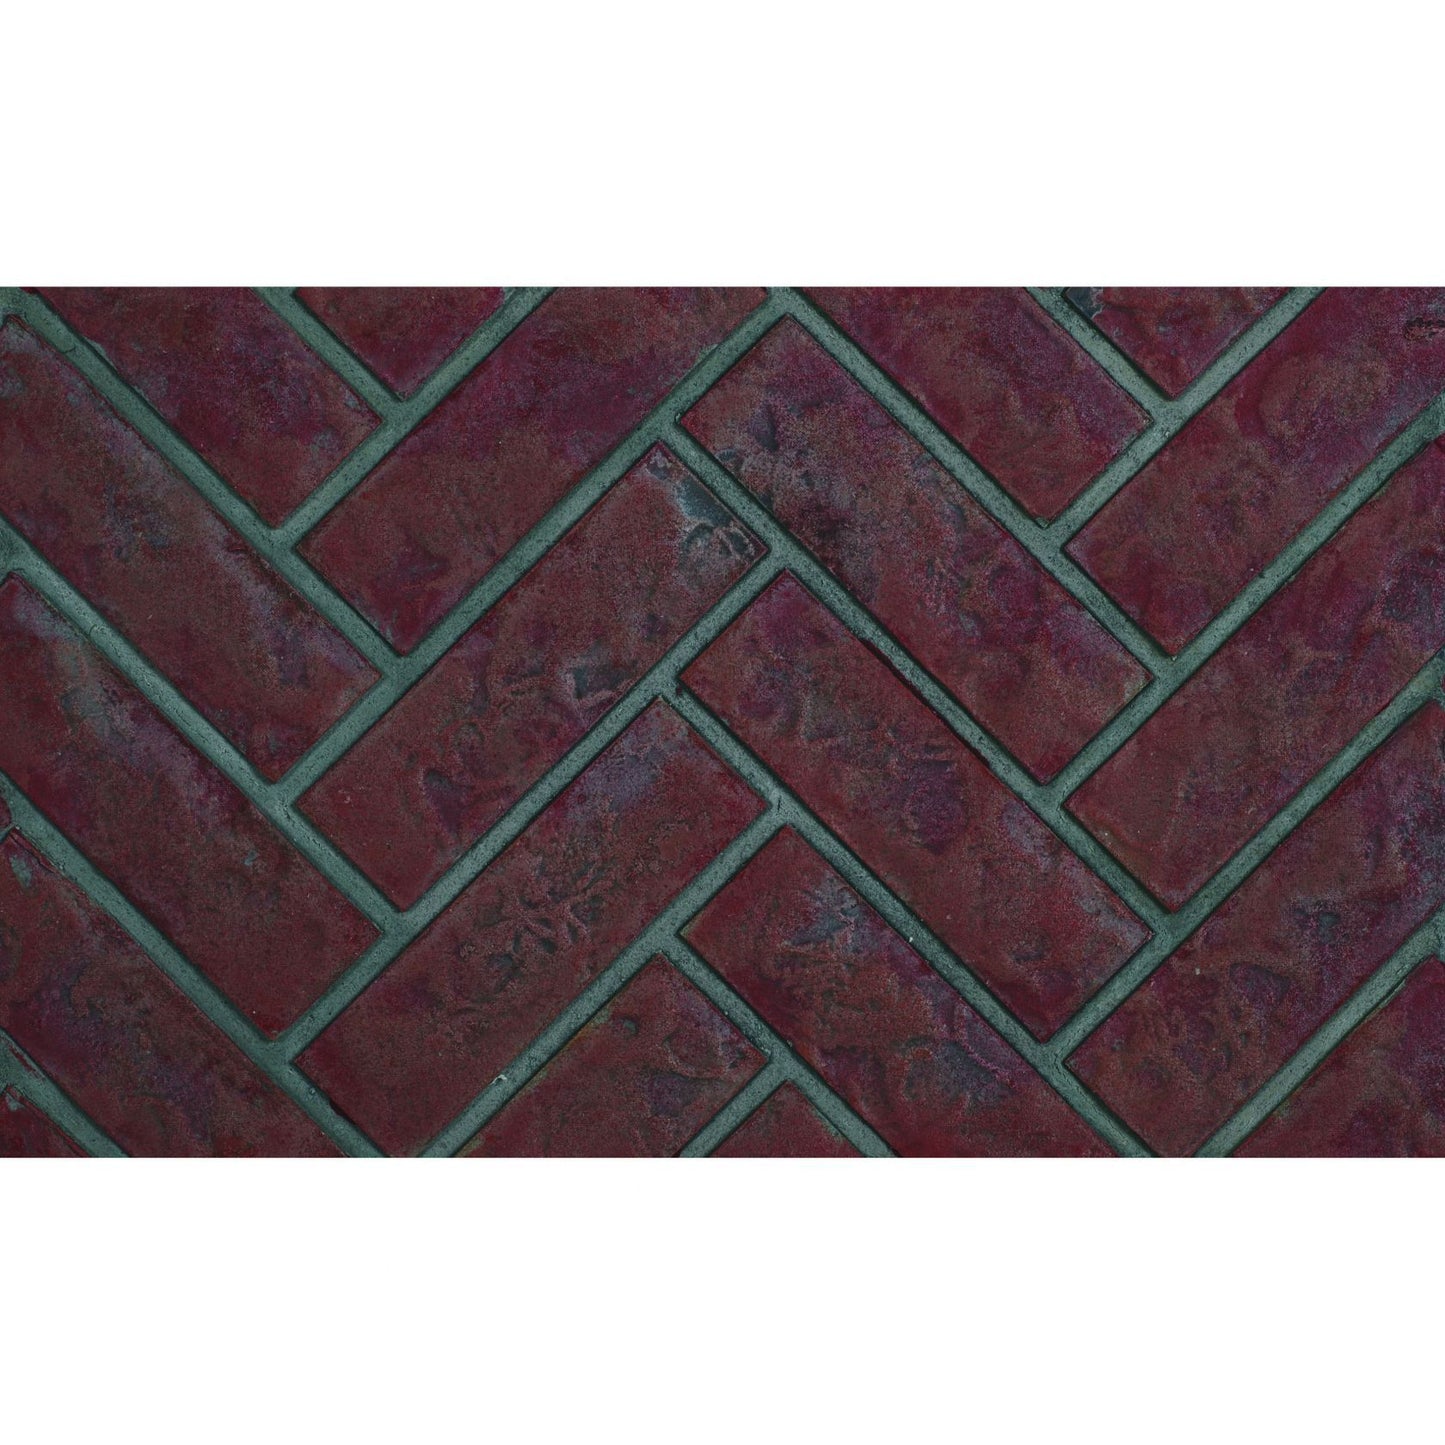 NAPDBPO36OH | Napoleon GSS36CF Decorative Brick Panels | Old Town Red Herringbone Brick Pattern